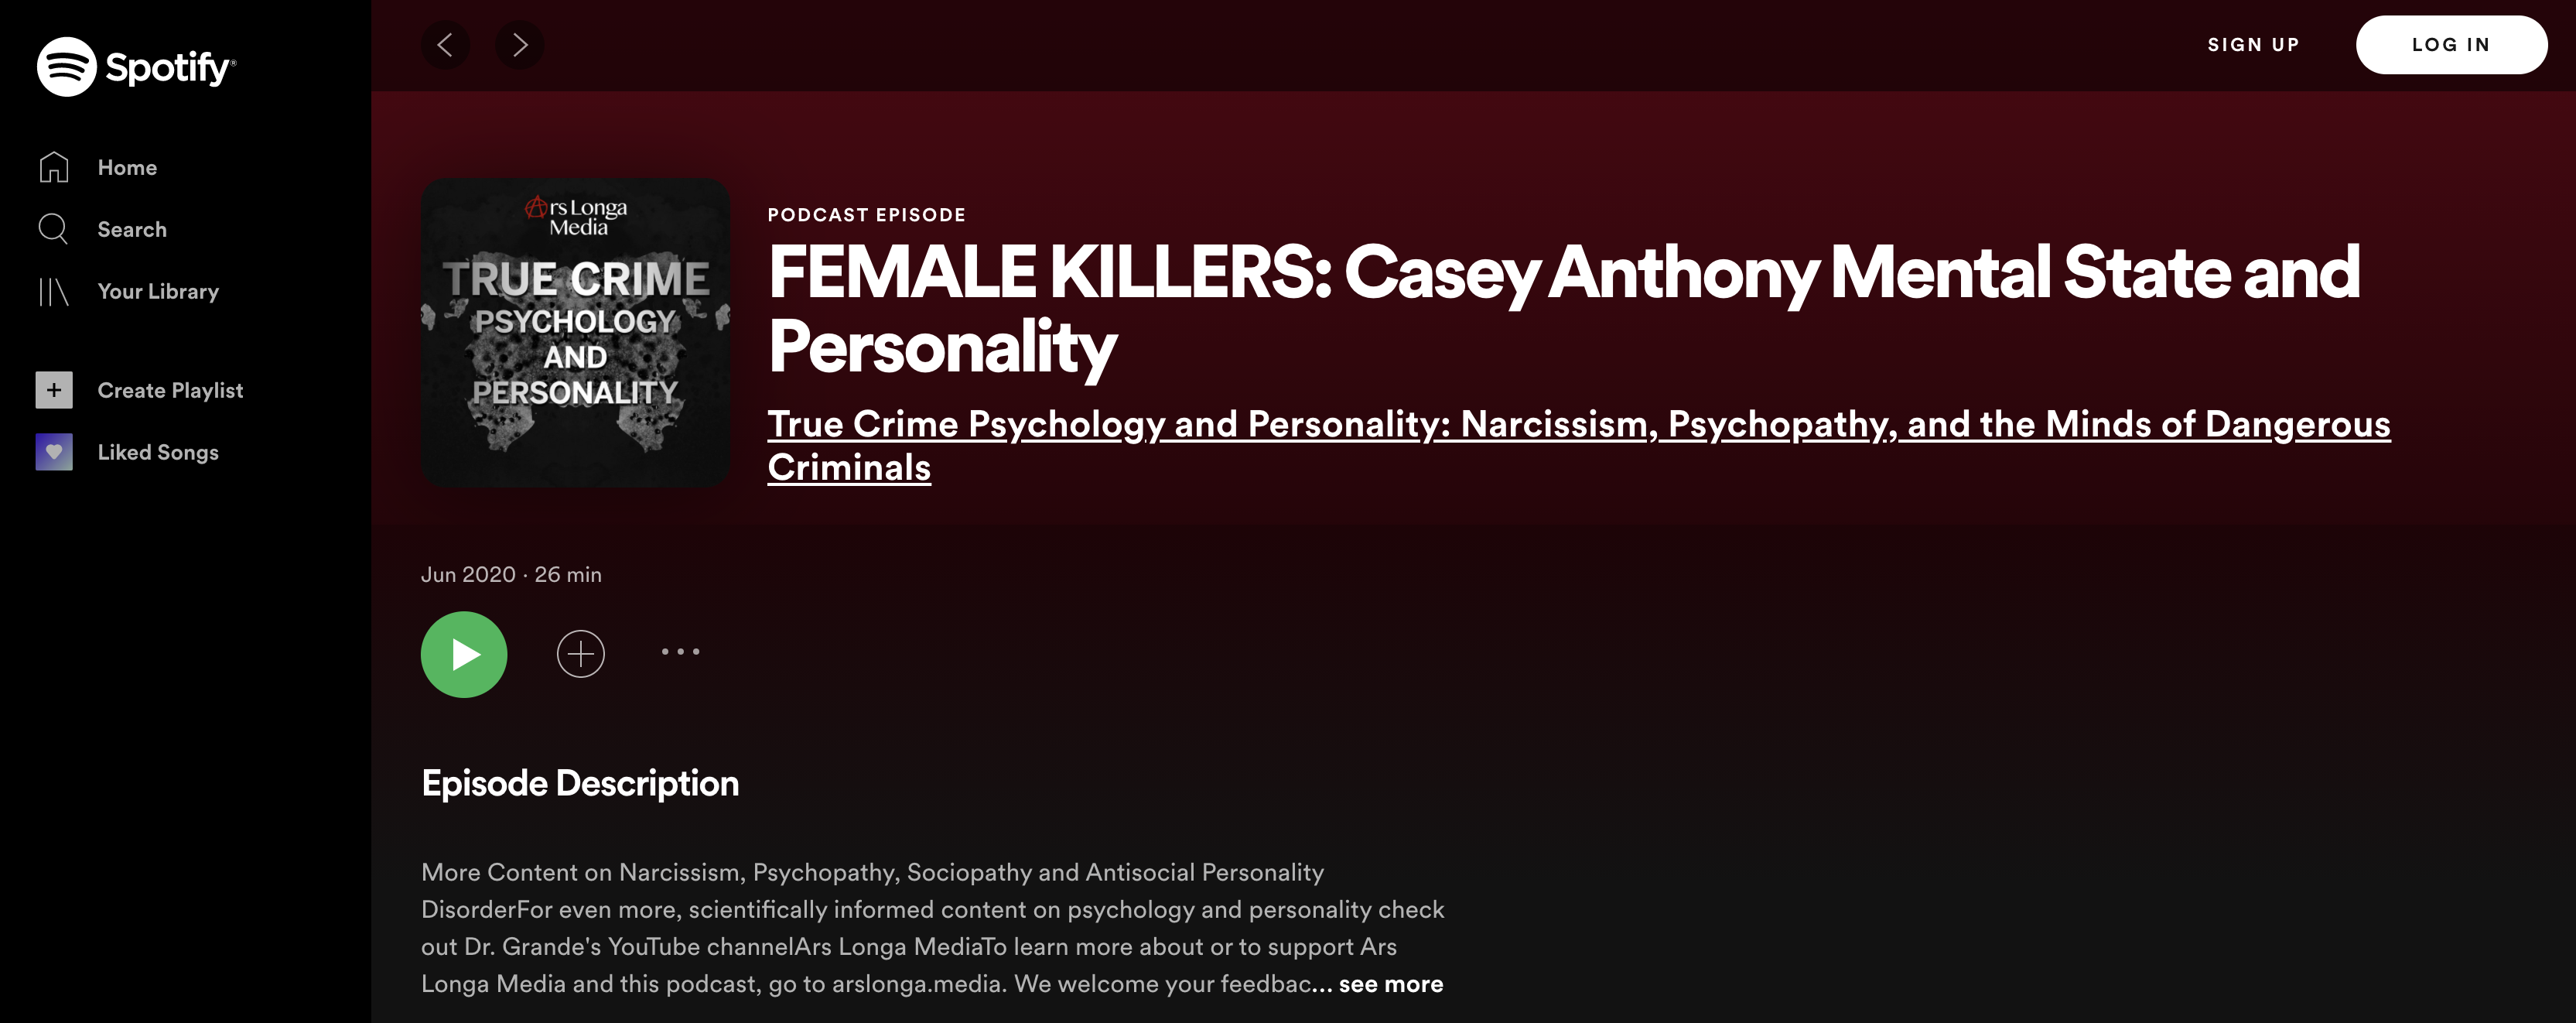 Vega Digital Awards Winner - True Crime Psychology And Personality , Evergreen Podcasts